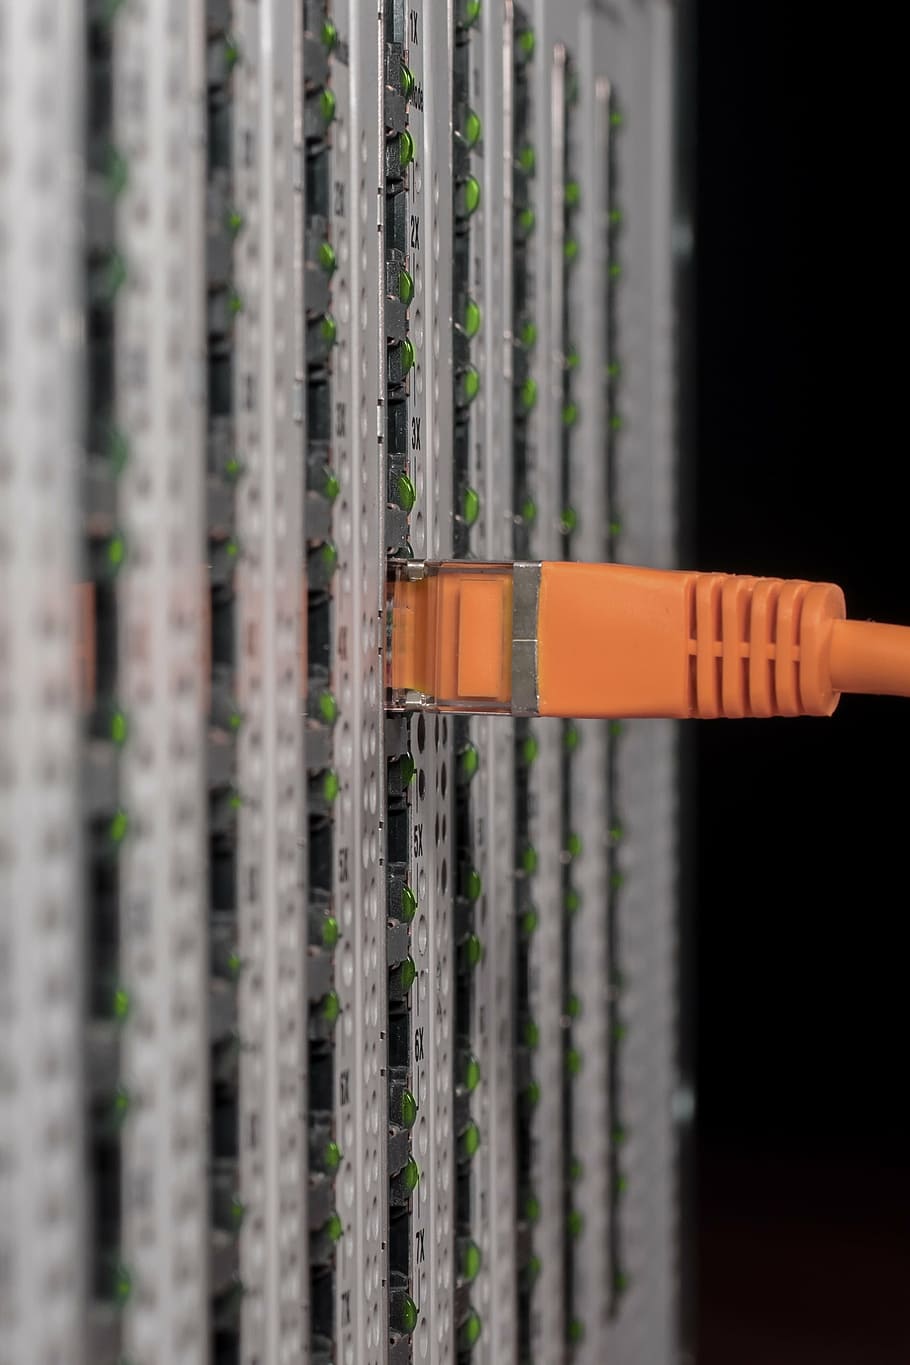 laranja, cabo utp, fotografia de close-up, servidor, gabinete de servidor, rede, cabo, cabo de remendo, cabos de rede, processamento de dados